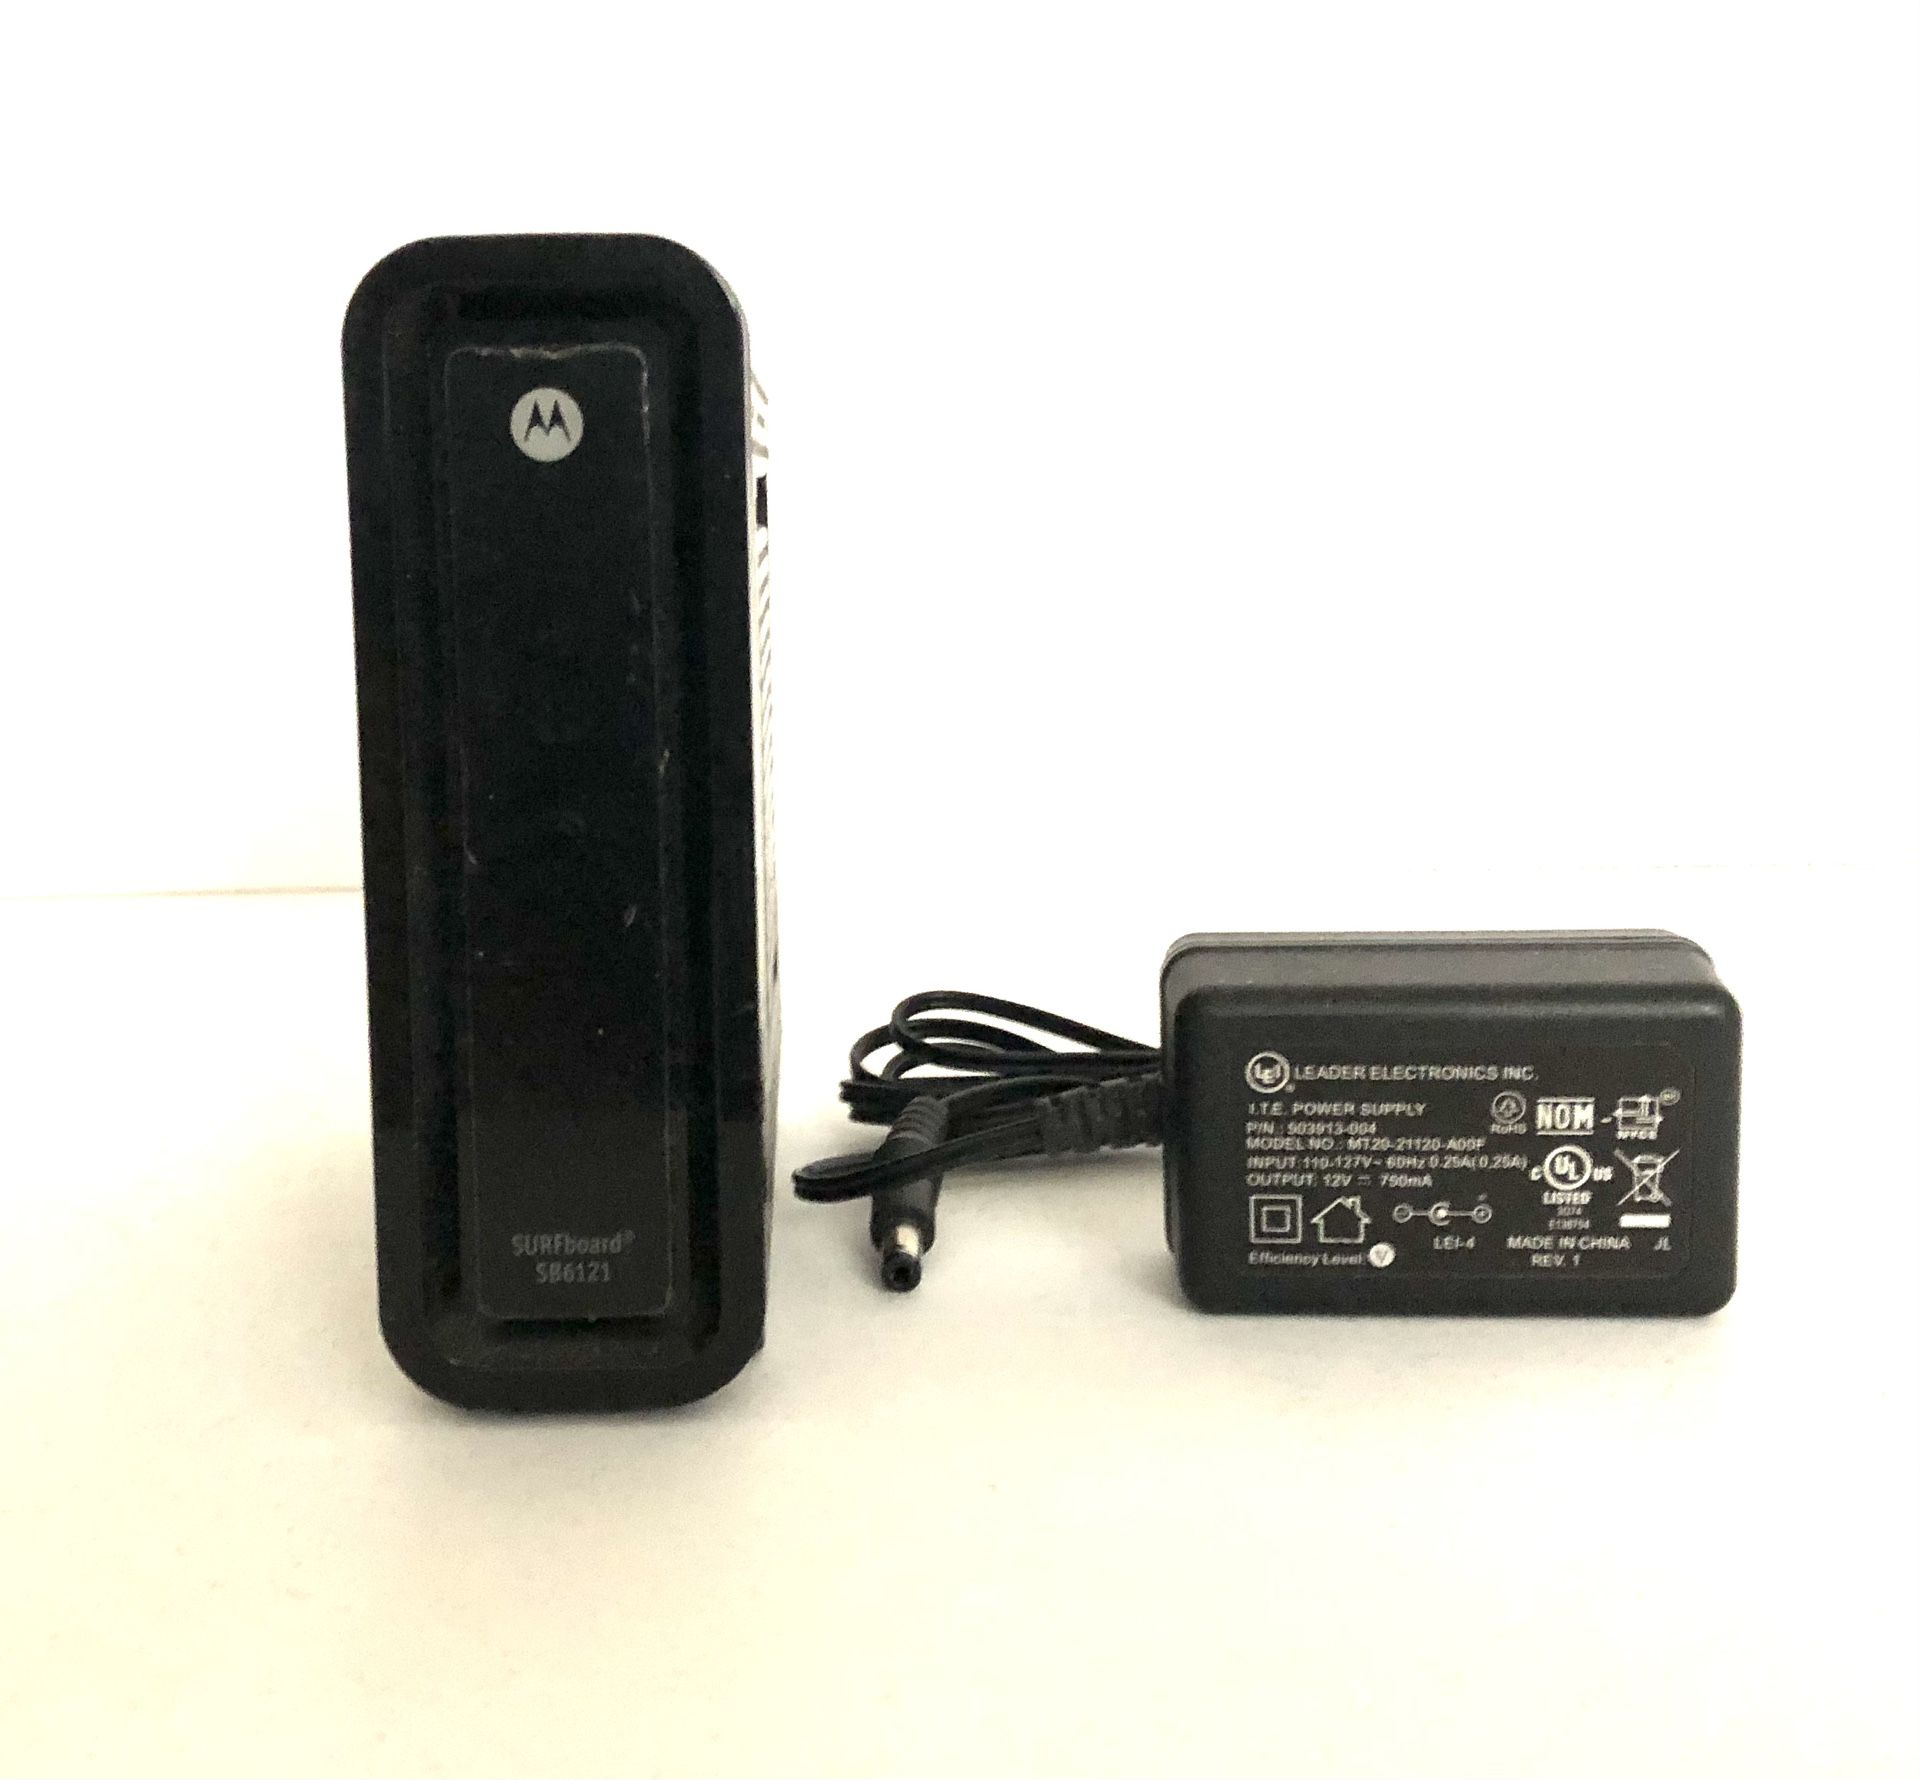 Motorola Arris Surfboard SB6121 DOCSIS 3.0 Cable Modem w/AC Adapter- Black